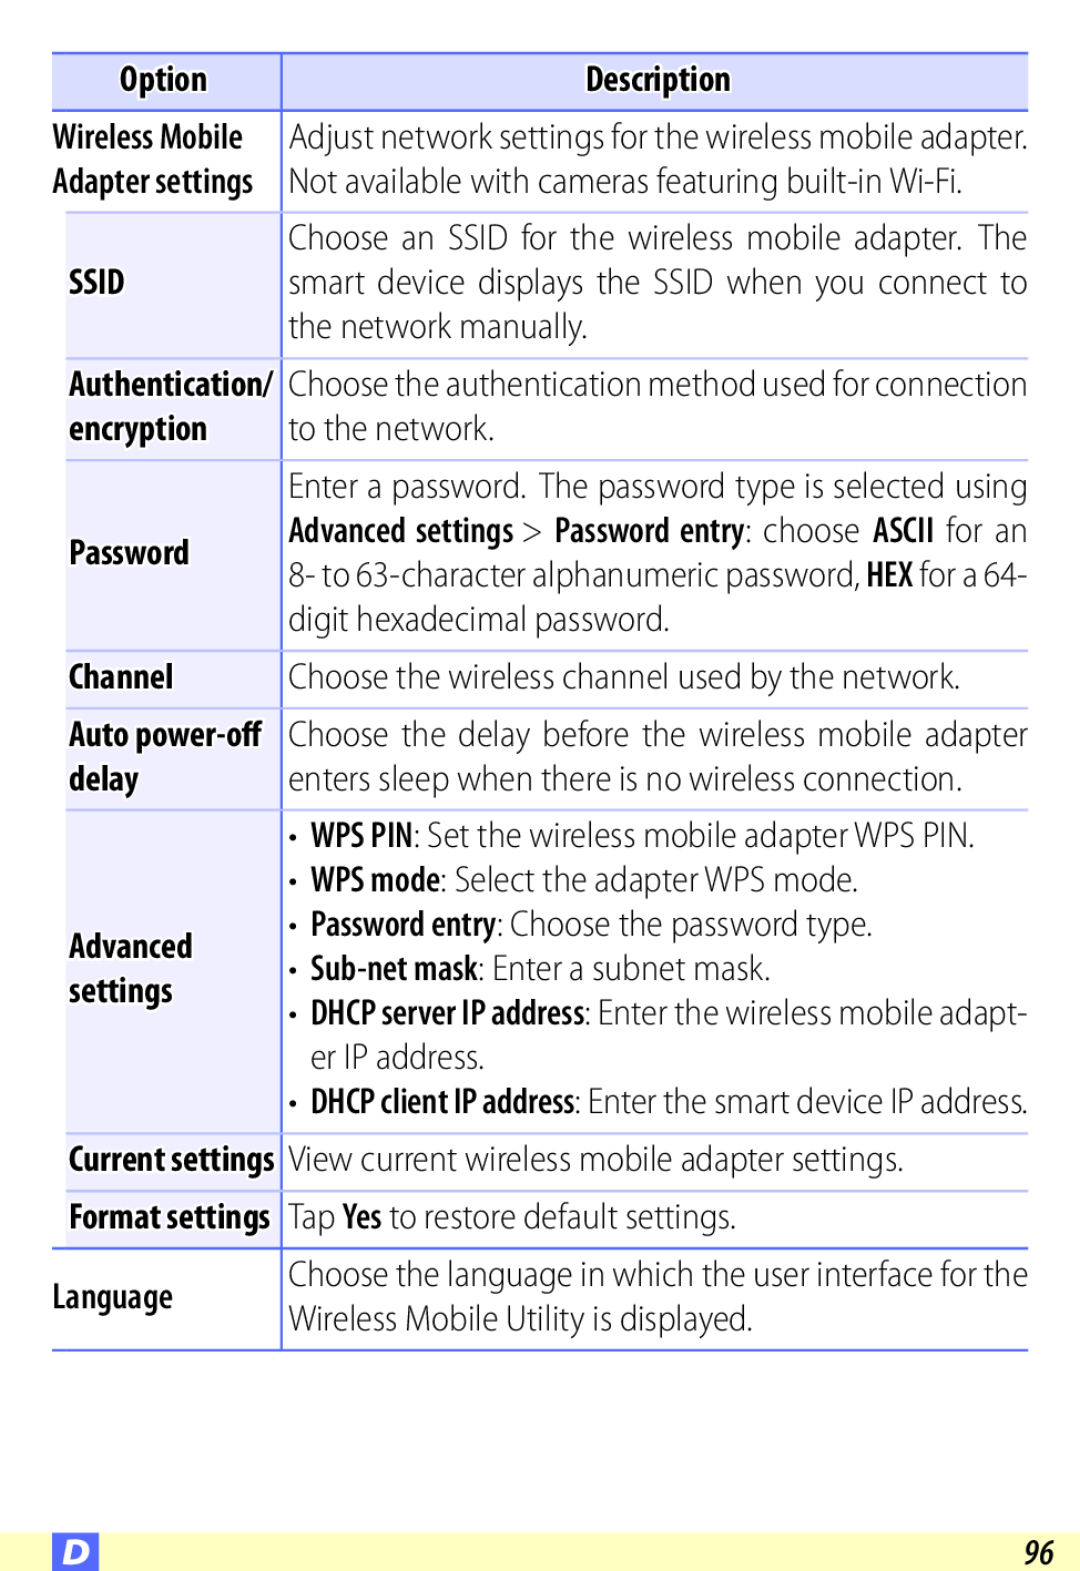 Nikon D600 user manual Option, Description, Ssid, encryption, Password, Channel, delay, Advanced, settings, Language 